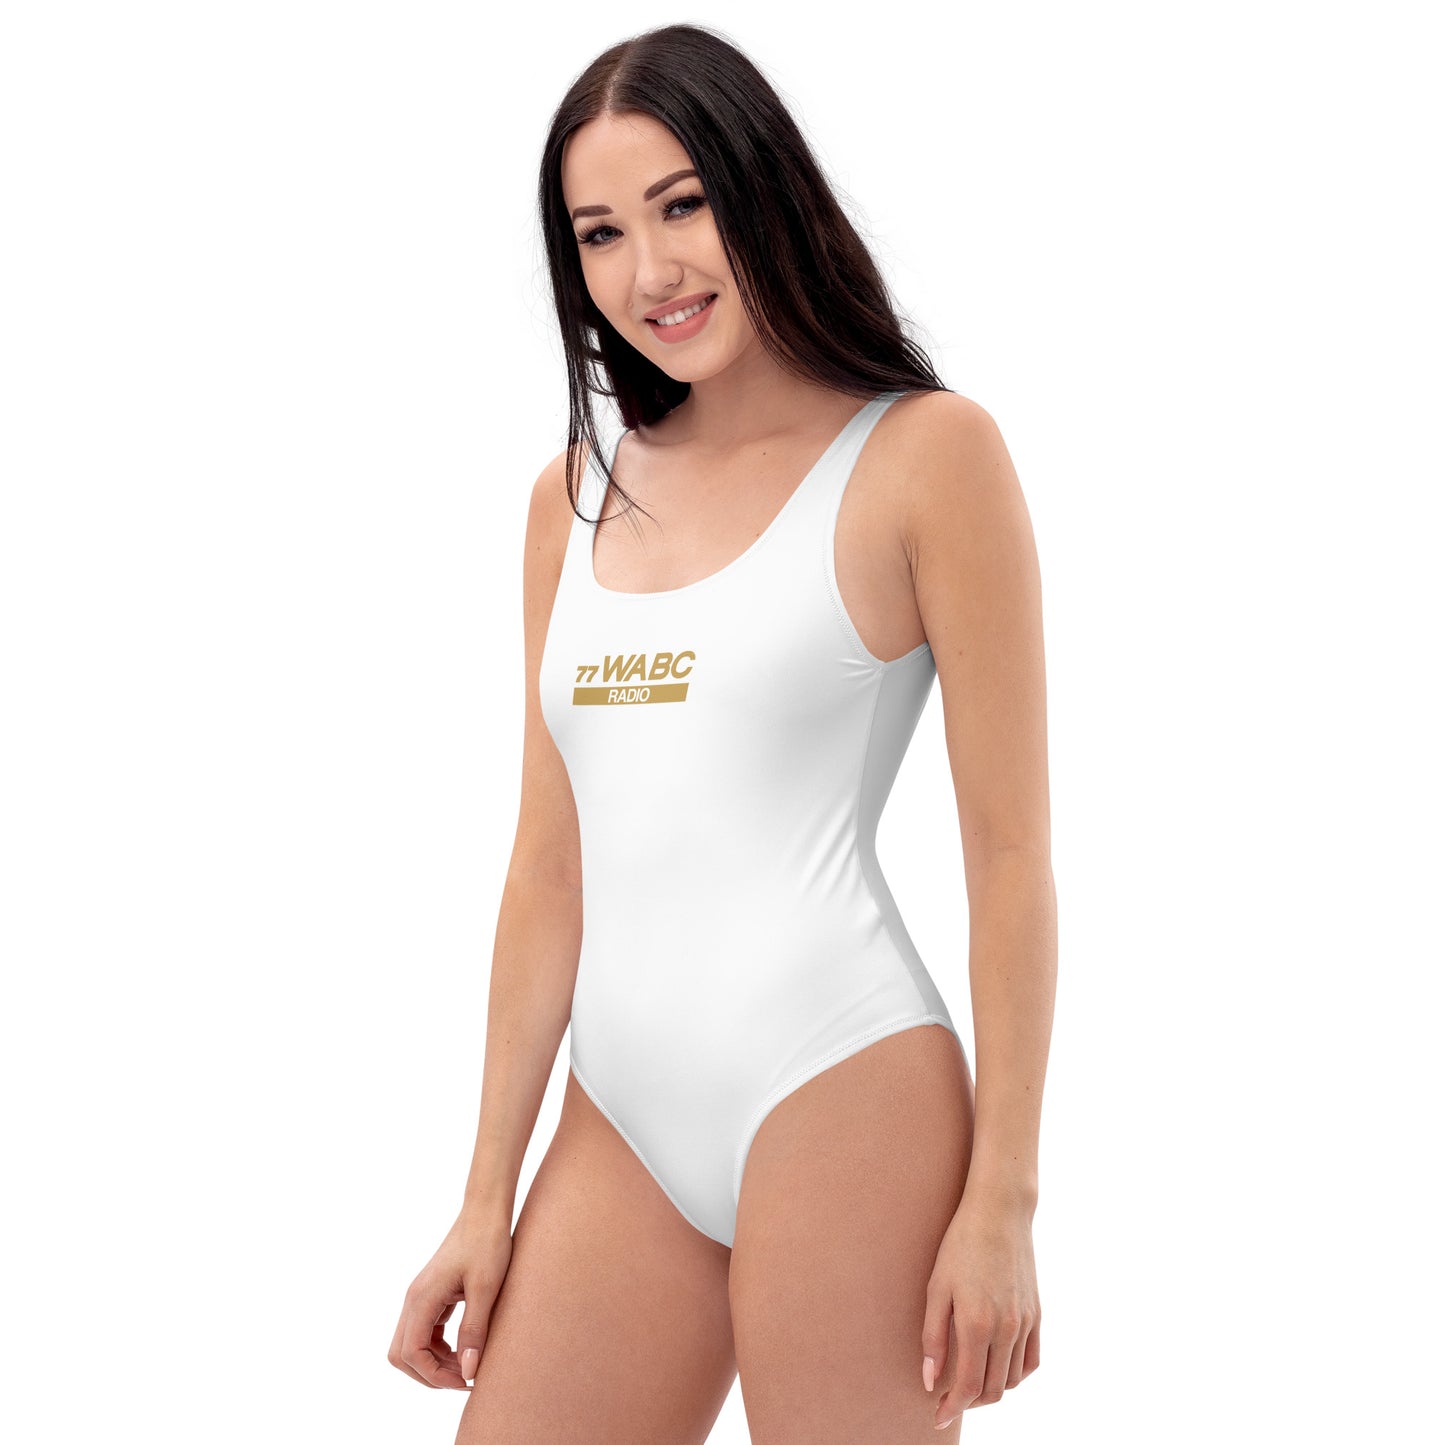 Women's 77WABC One-Piece Swimsuit